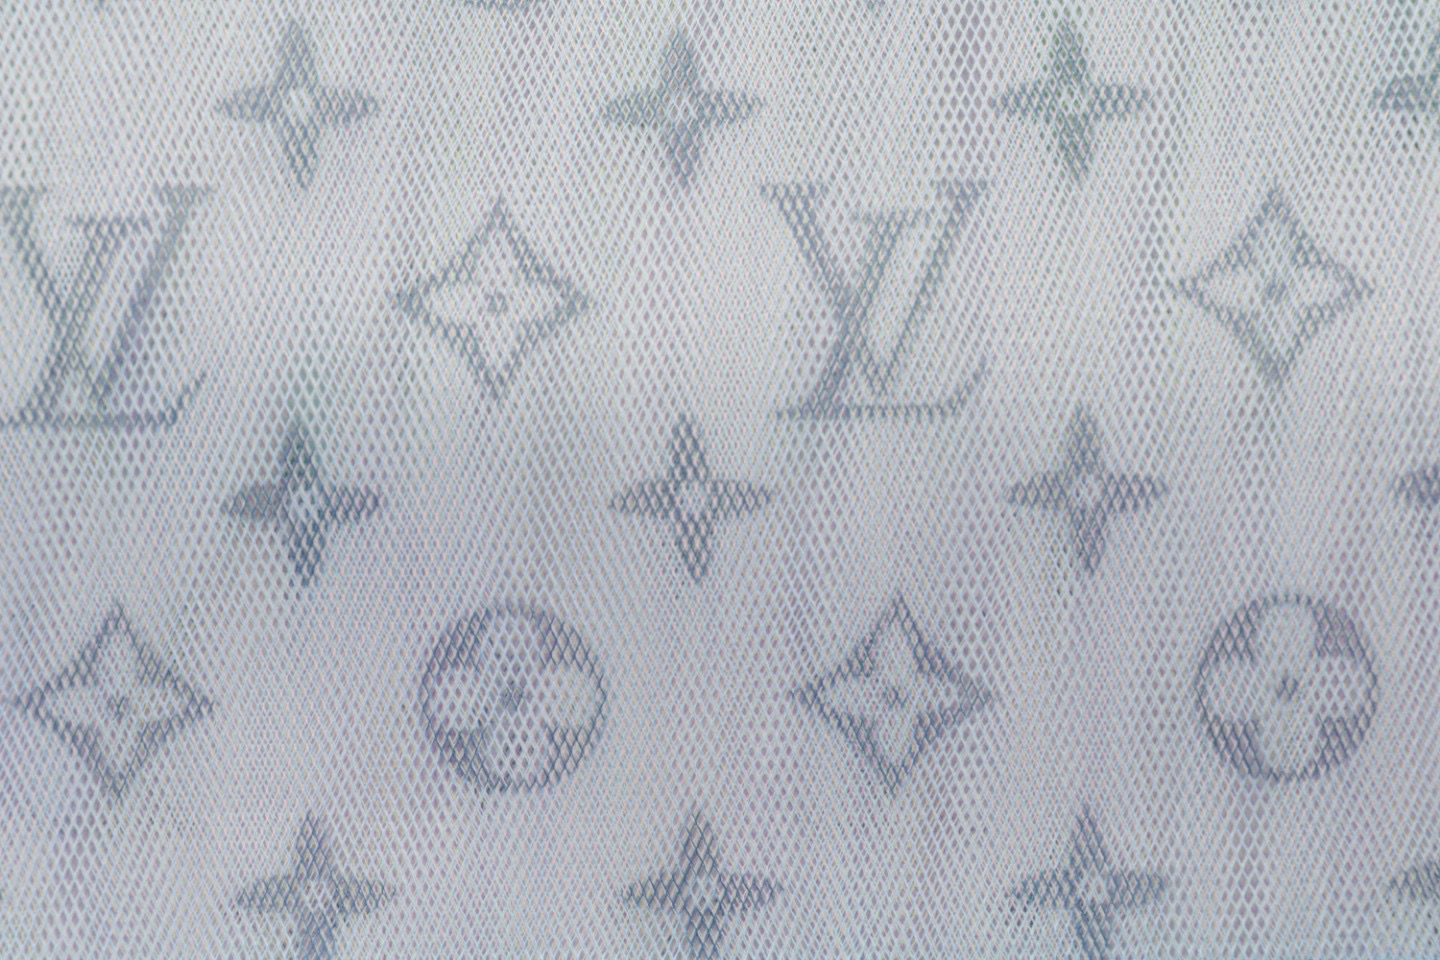 LV Monogram Grey T-Shirt